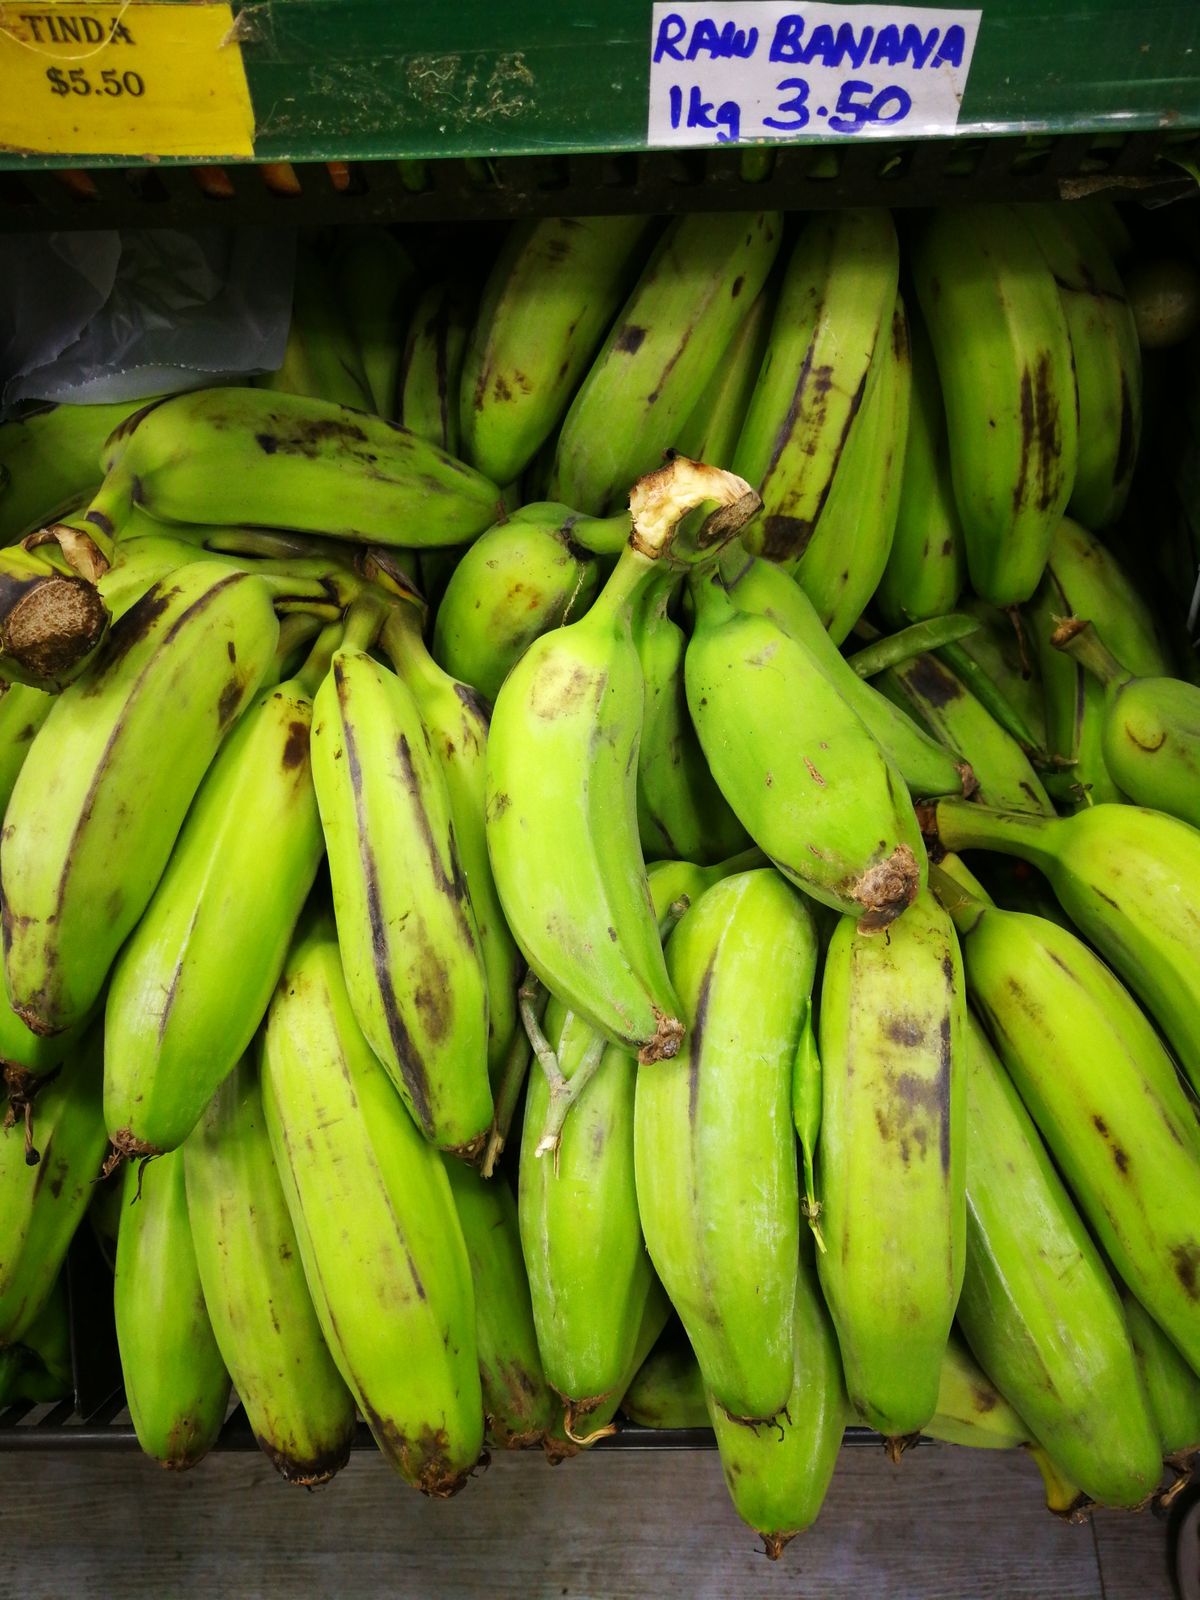 Sirove banane